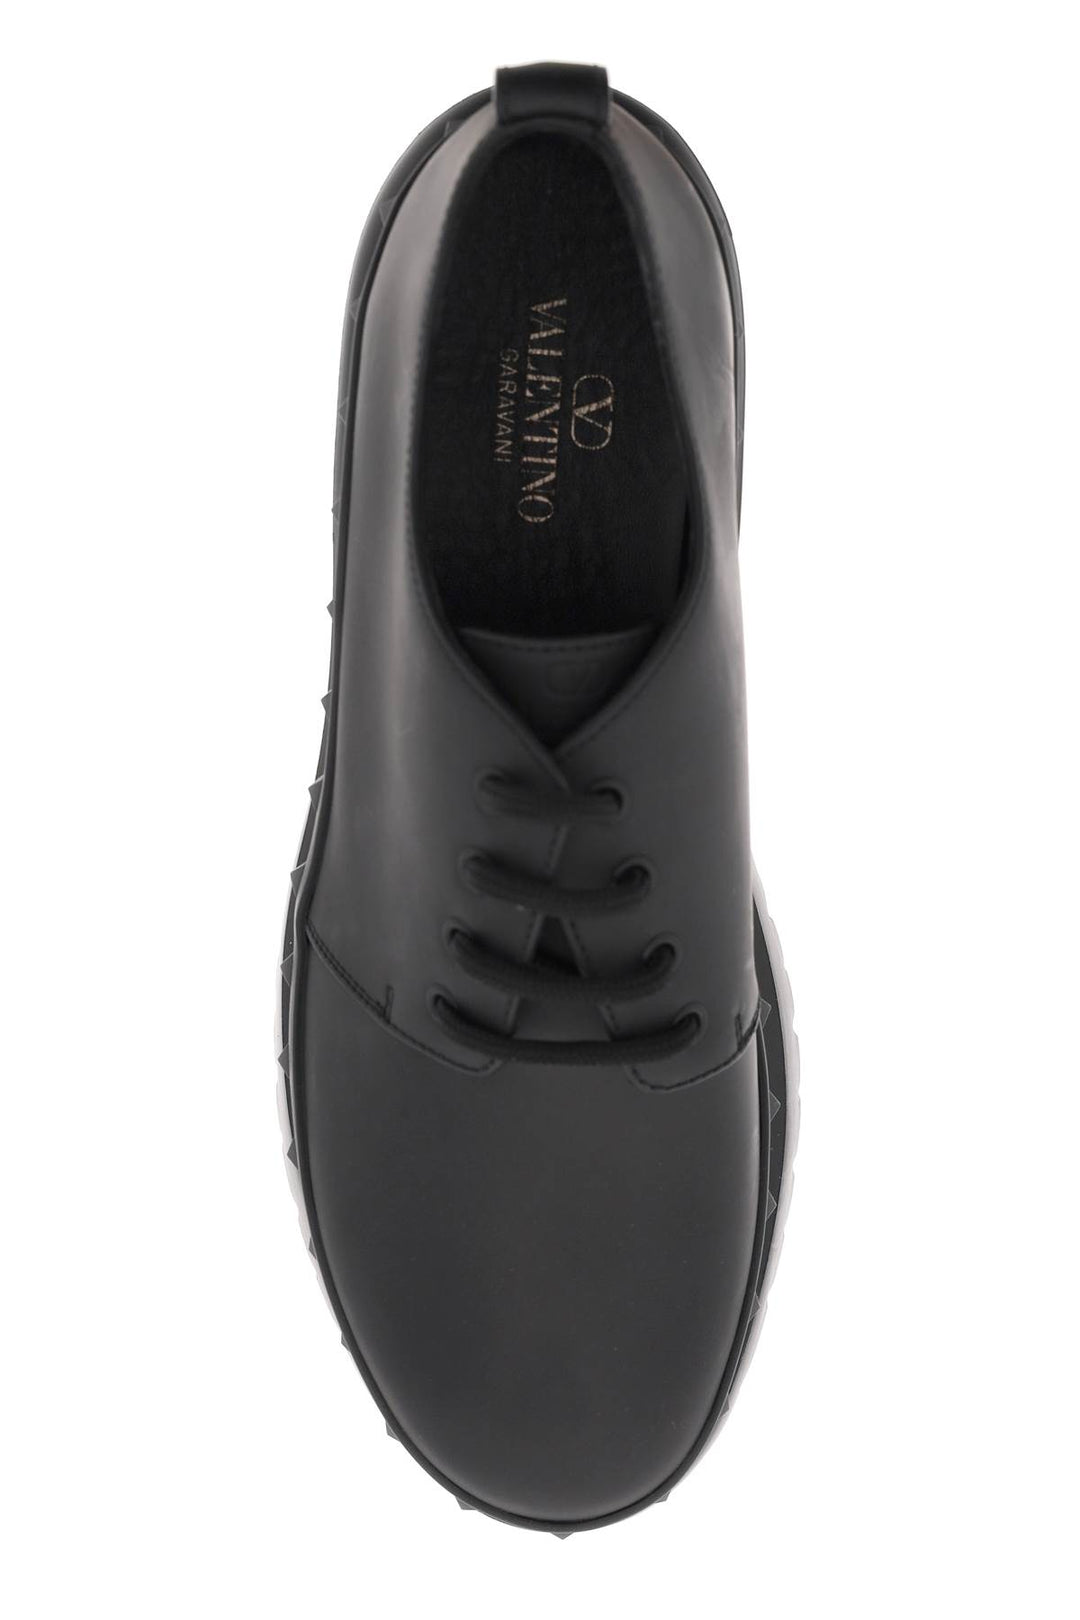 Valentino Garavani Rockstud M Way Leather Derby Shoes   Black